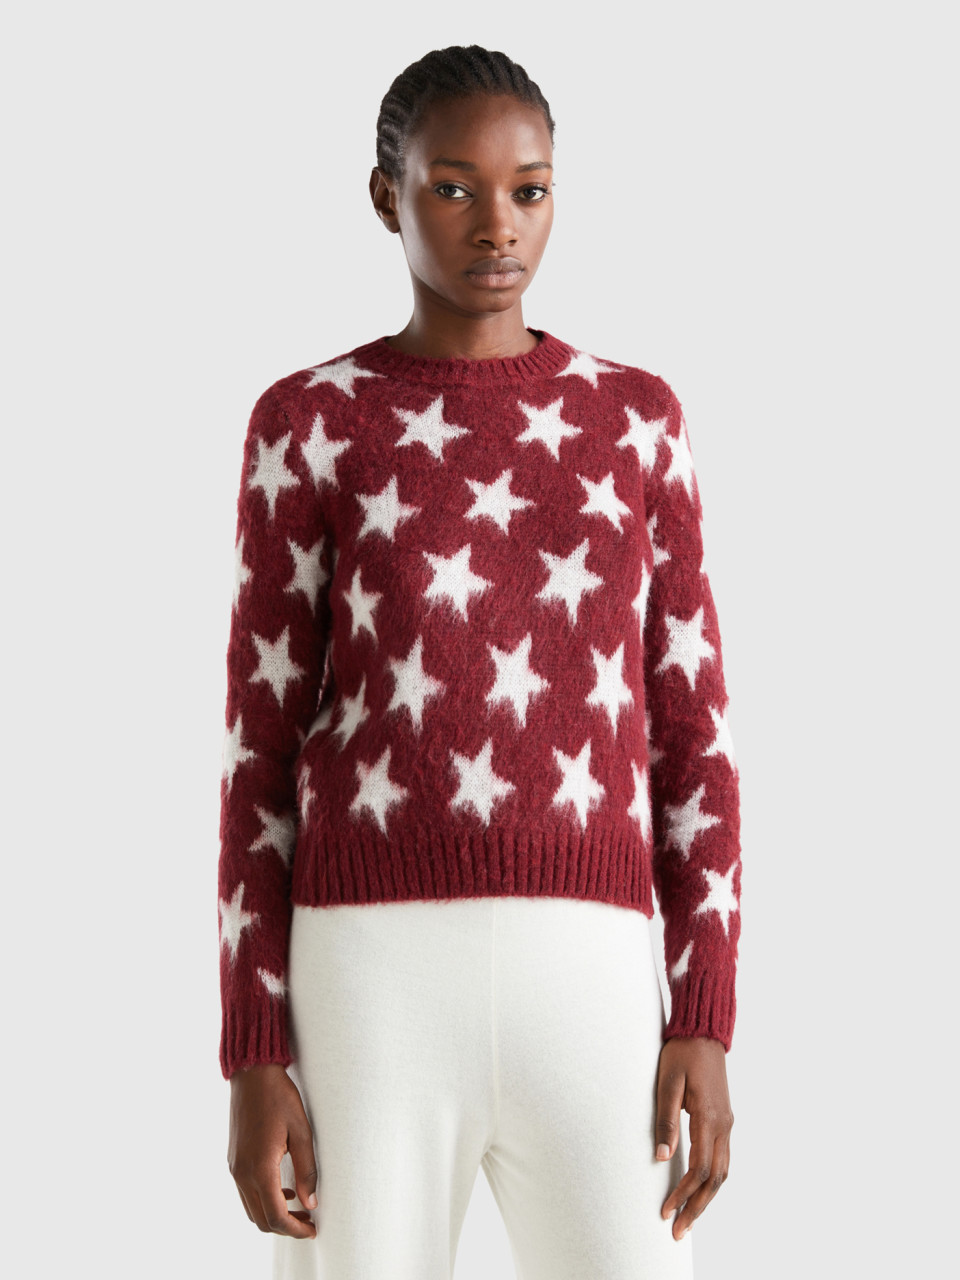 Benetton, Warm Sweater With Stars, Burgundy, Women